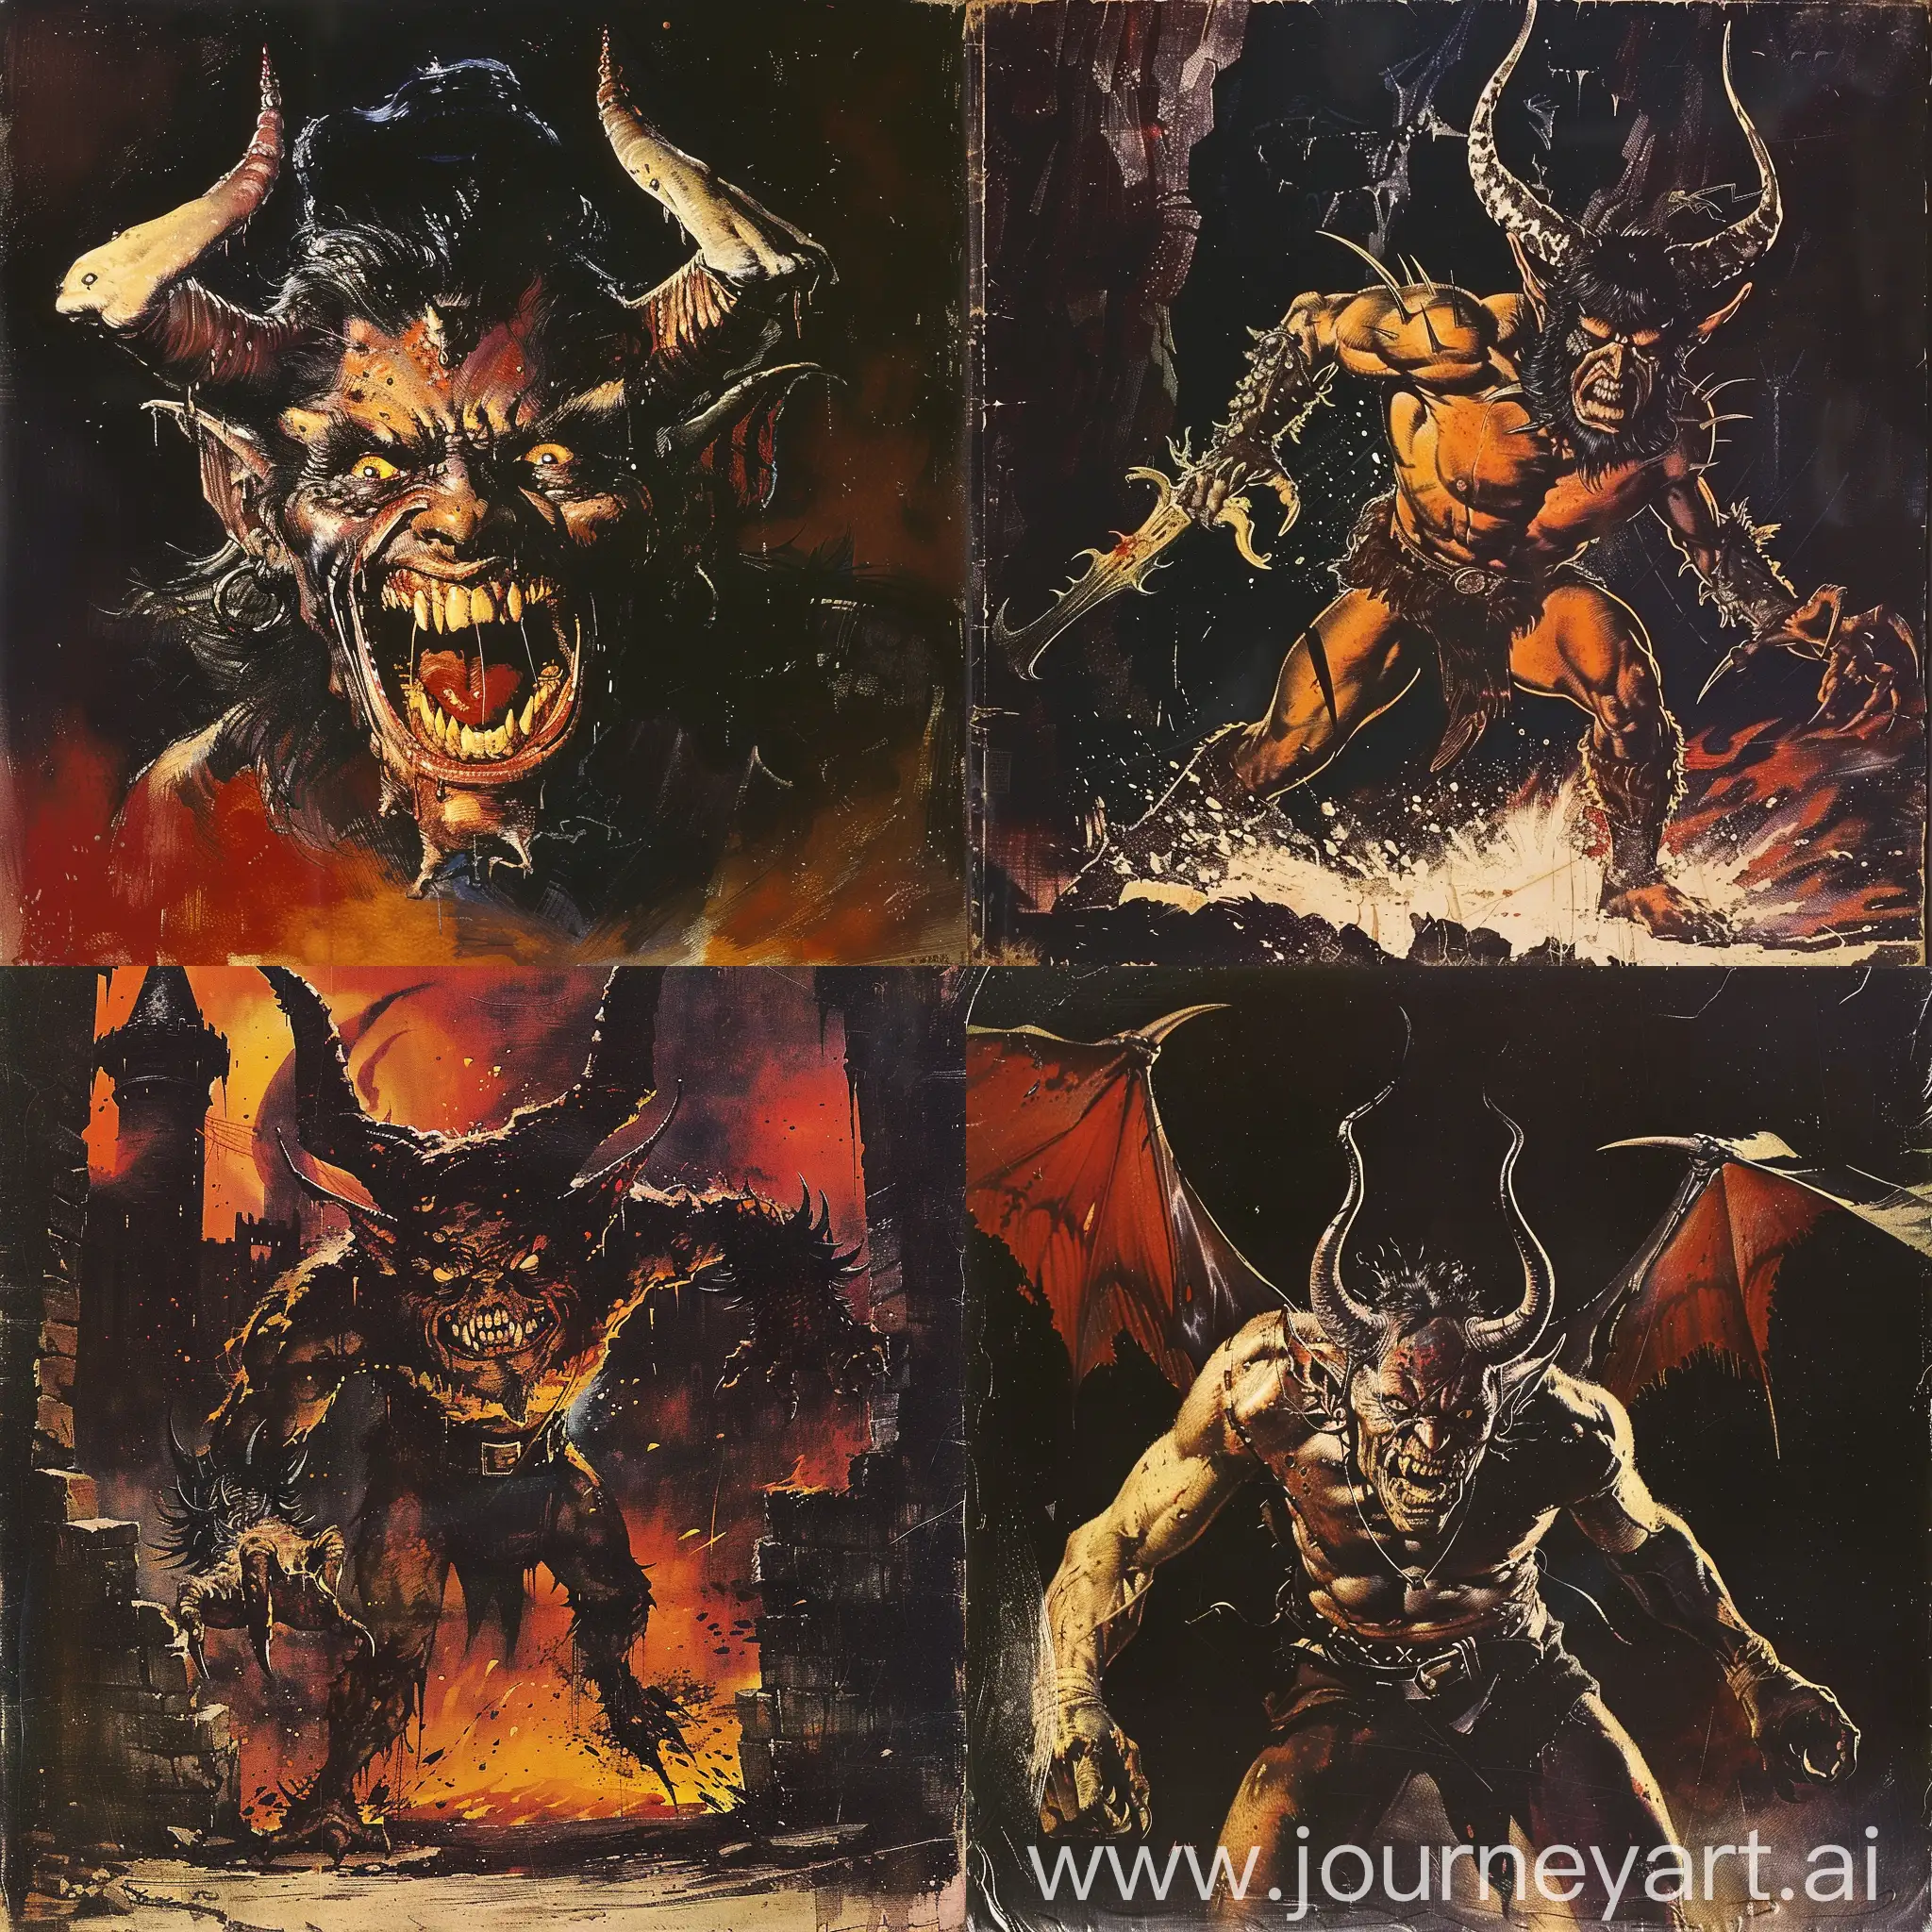 1970s dark fantasy book cover art of a demon